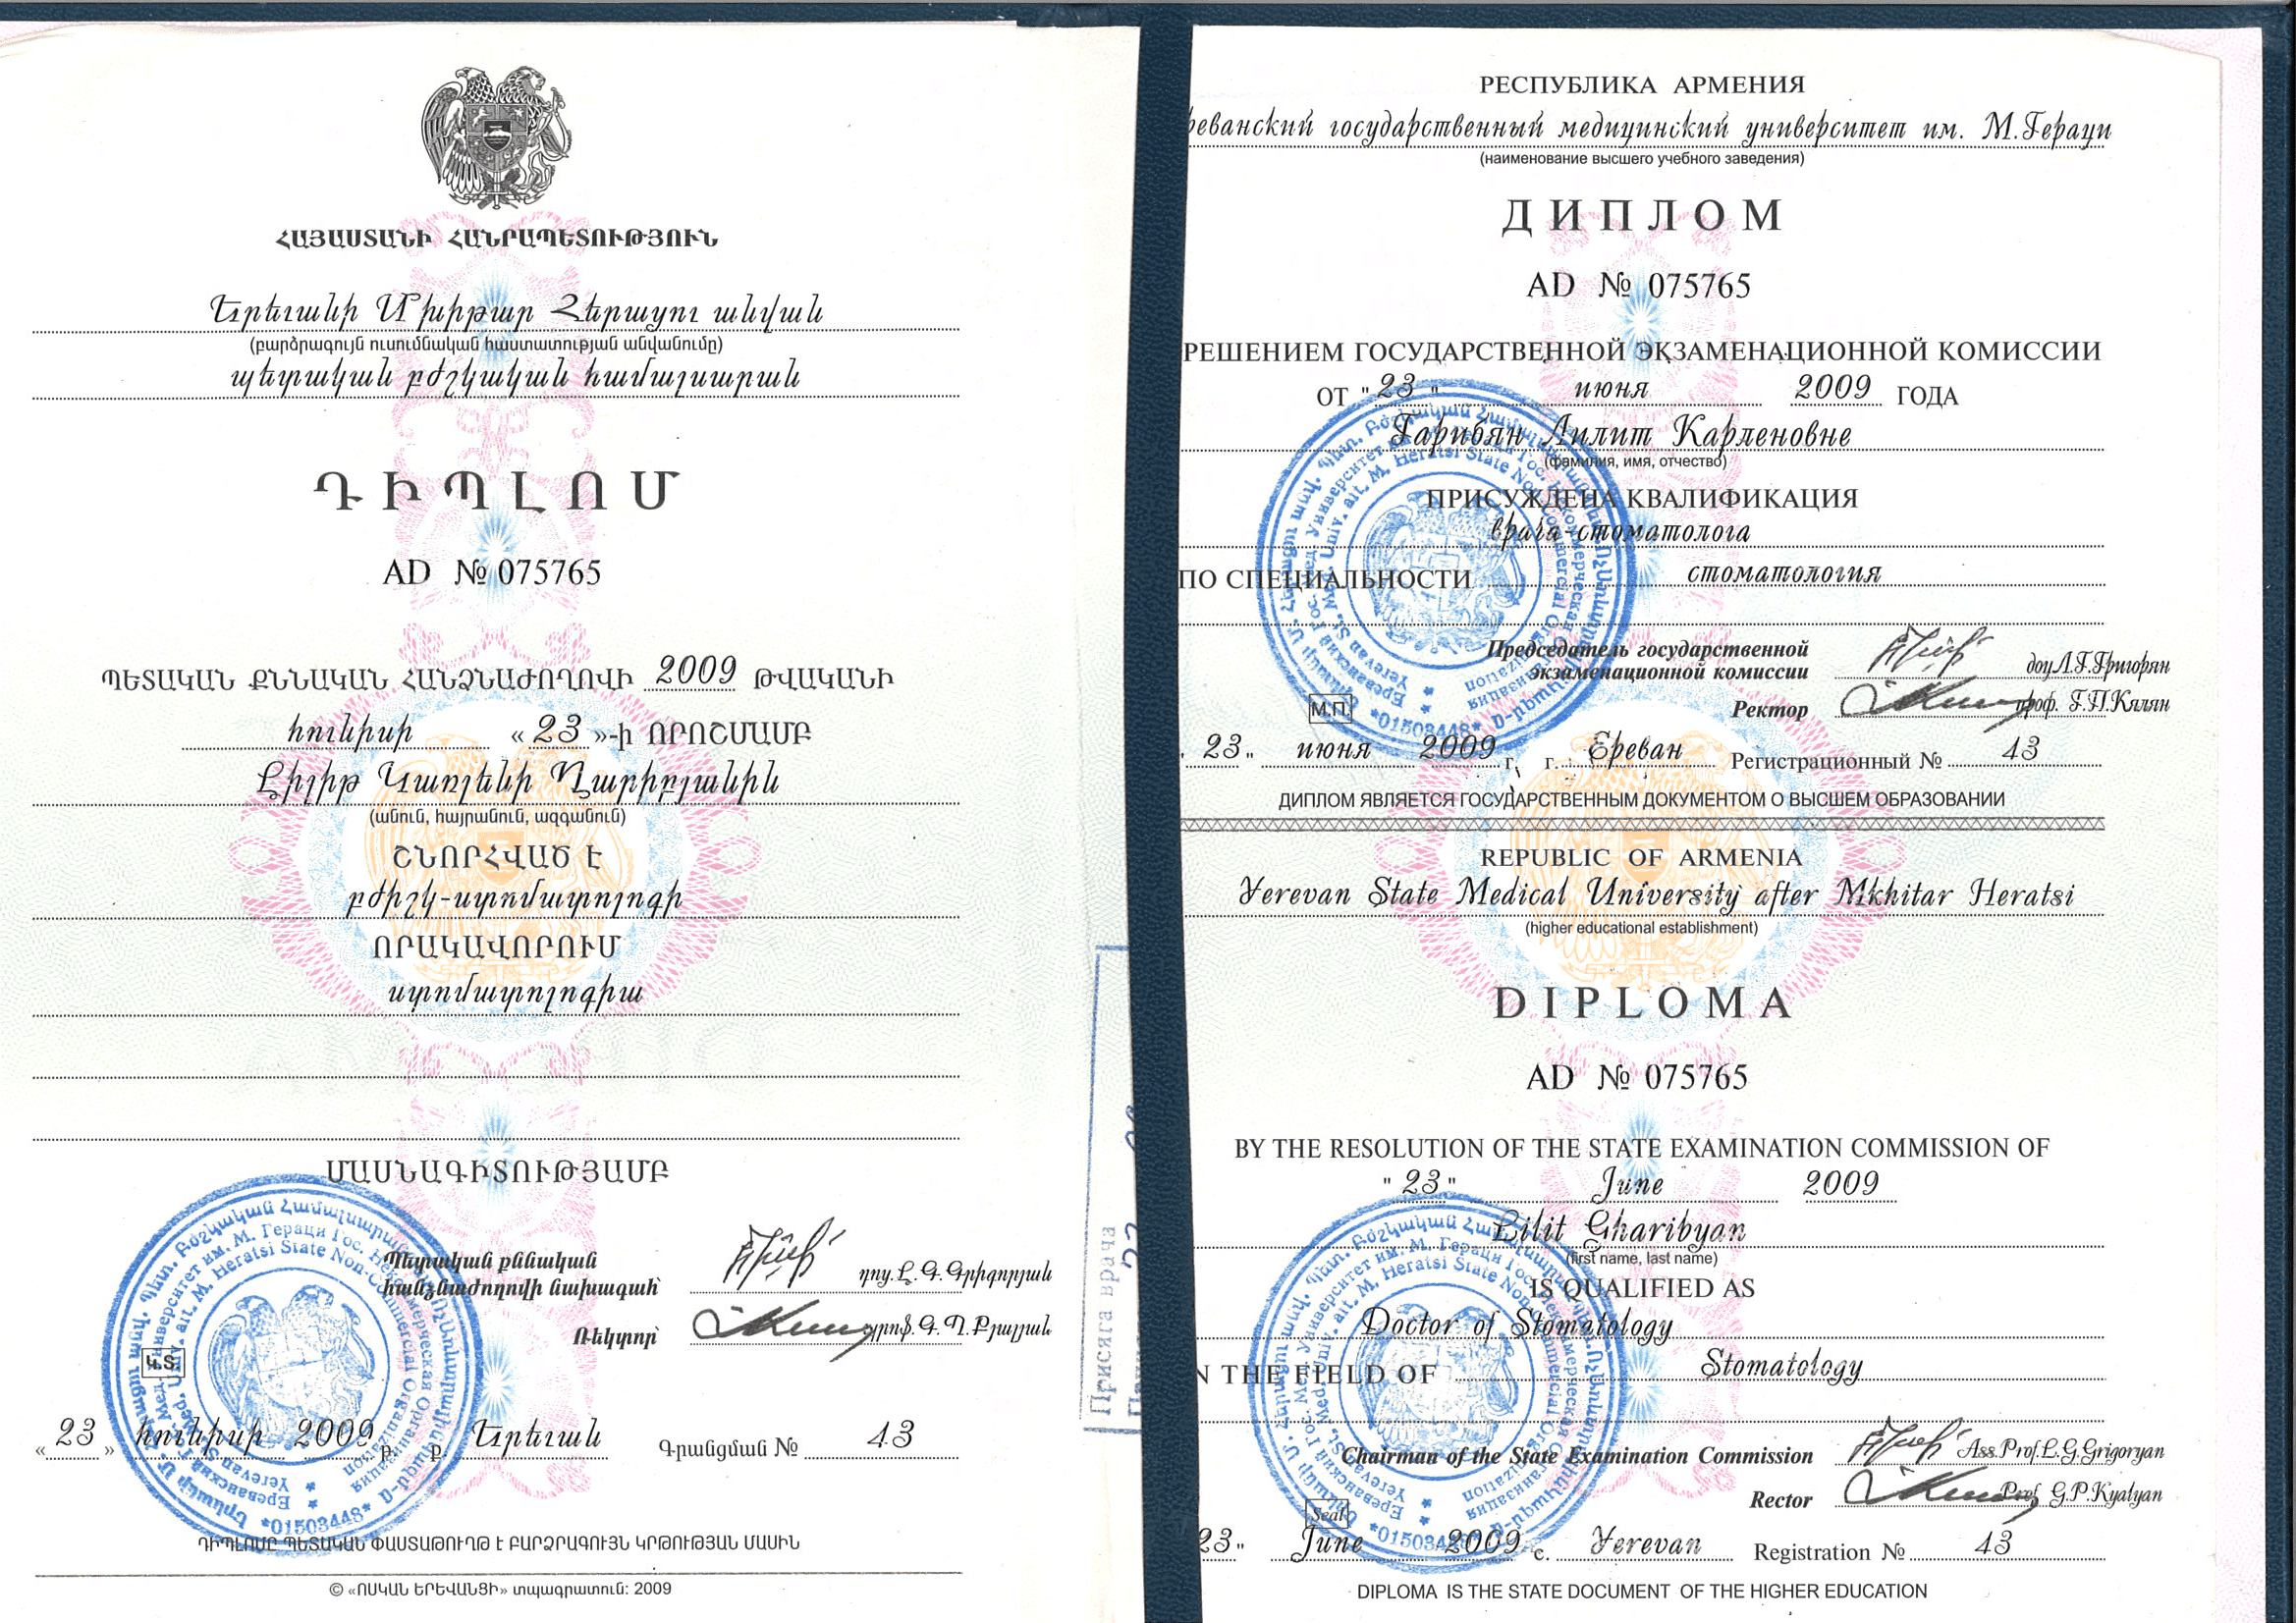 Гарибян Лилит Карленовна сертификат 1